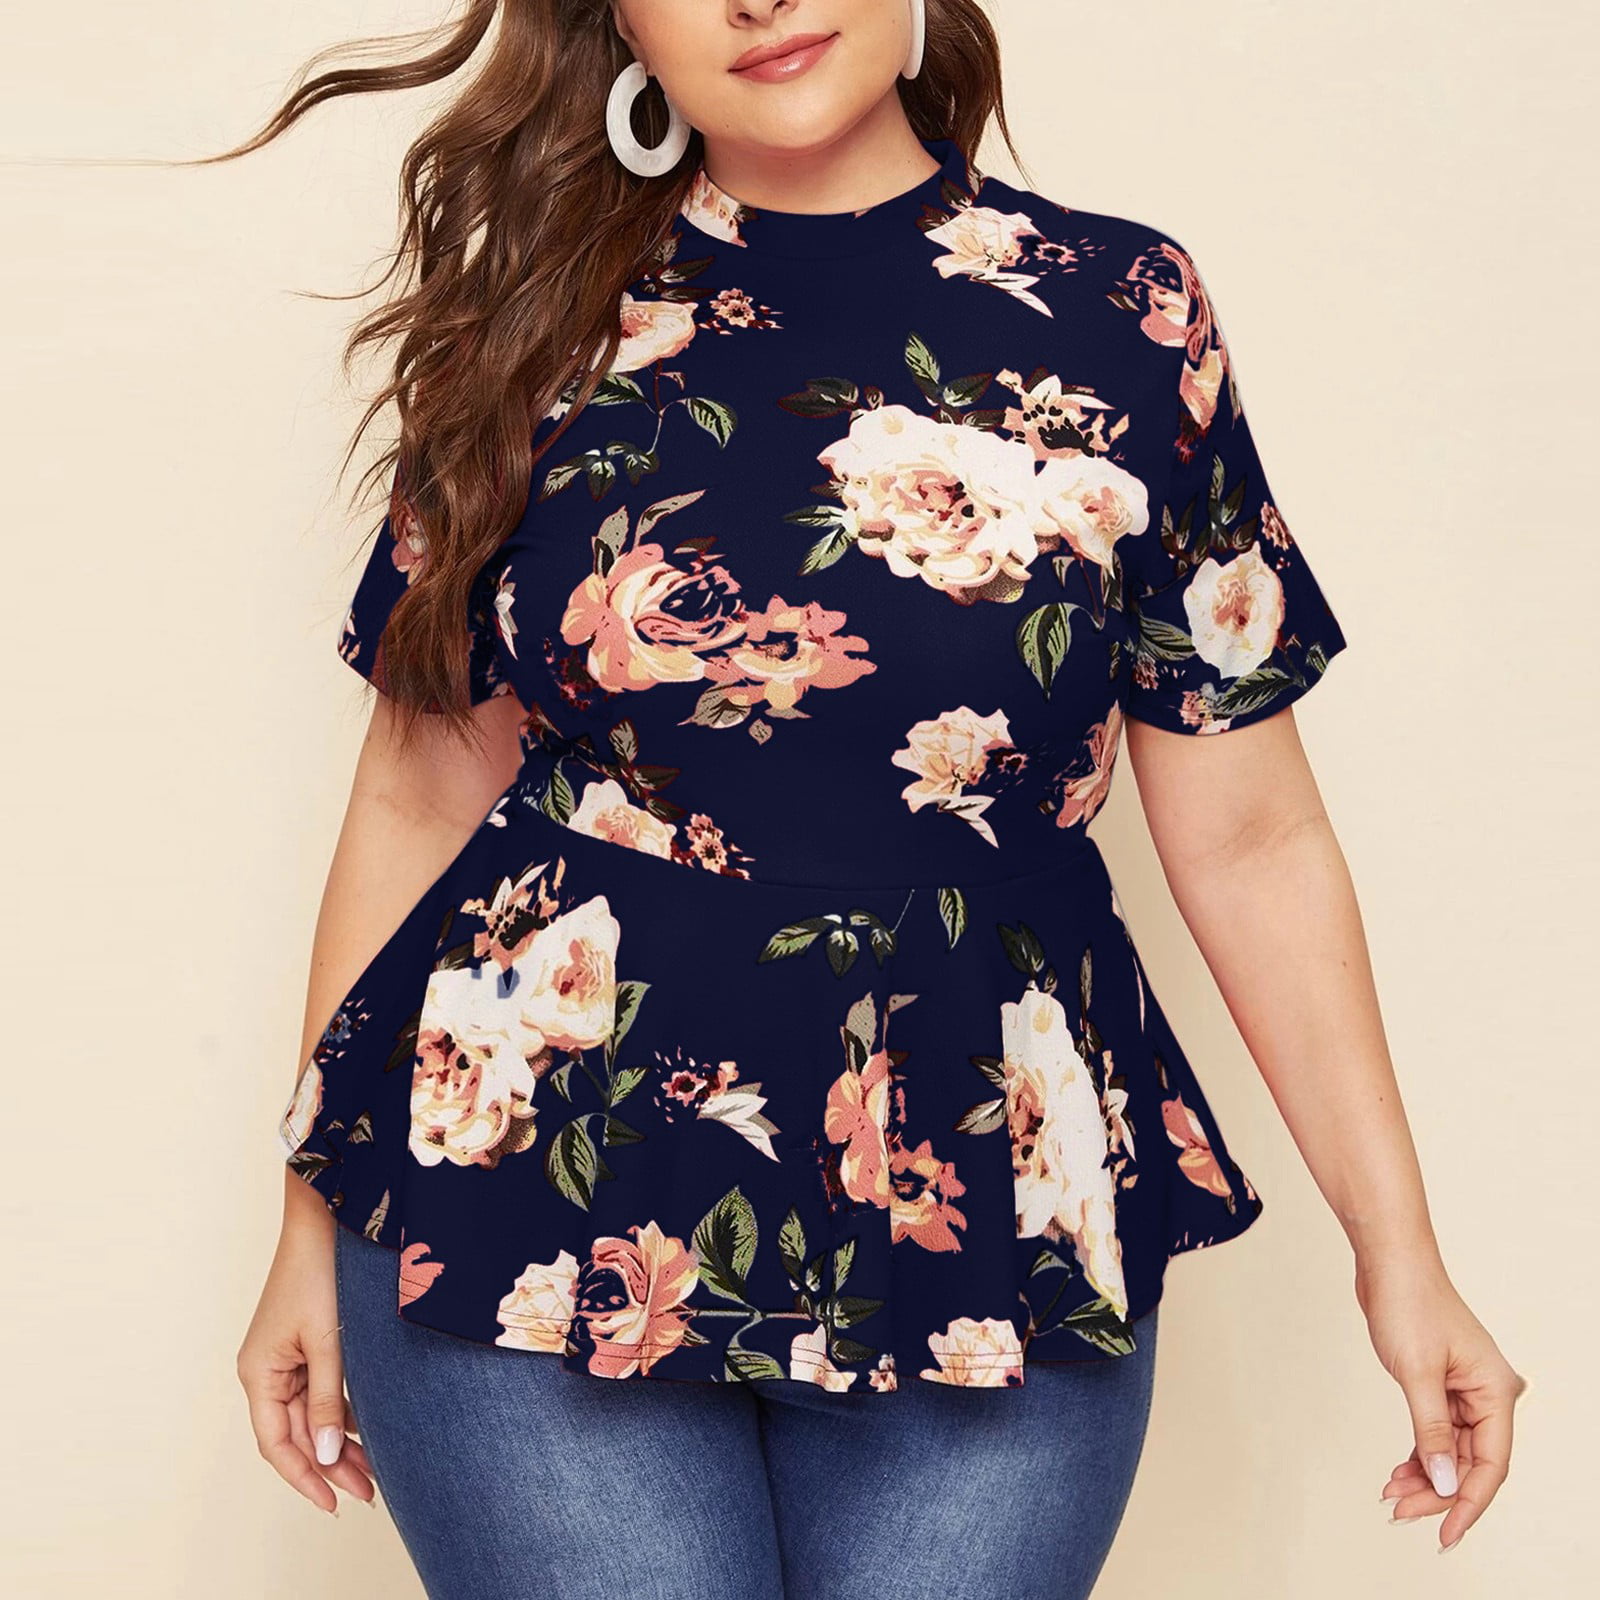 size summer top Plus Size Women Casual Short Sleeve Plus Mock Neck Floral Print Peplum Top Blouse T Shirts Plus Size Tops Red + XL - Walmart.com